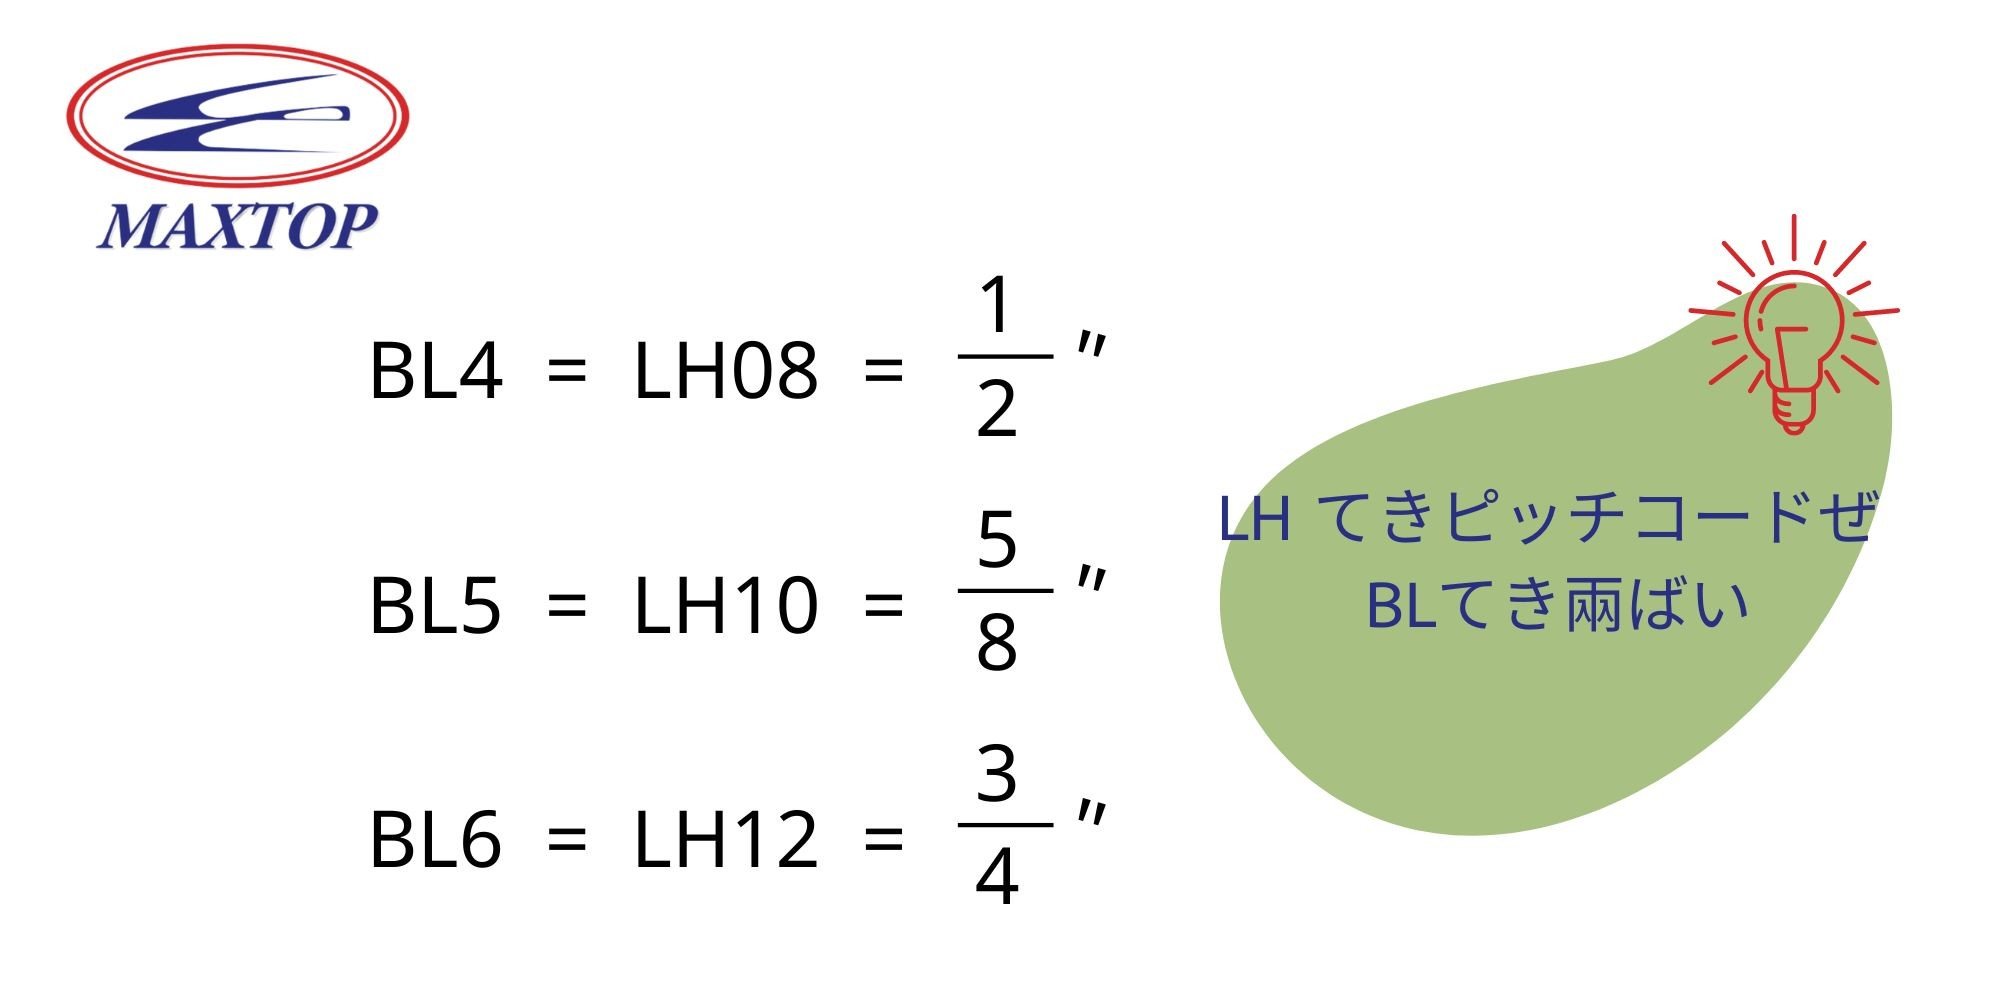 pitch rule of BL & LH(Jap.)